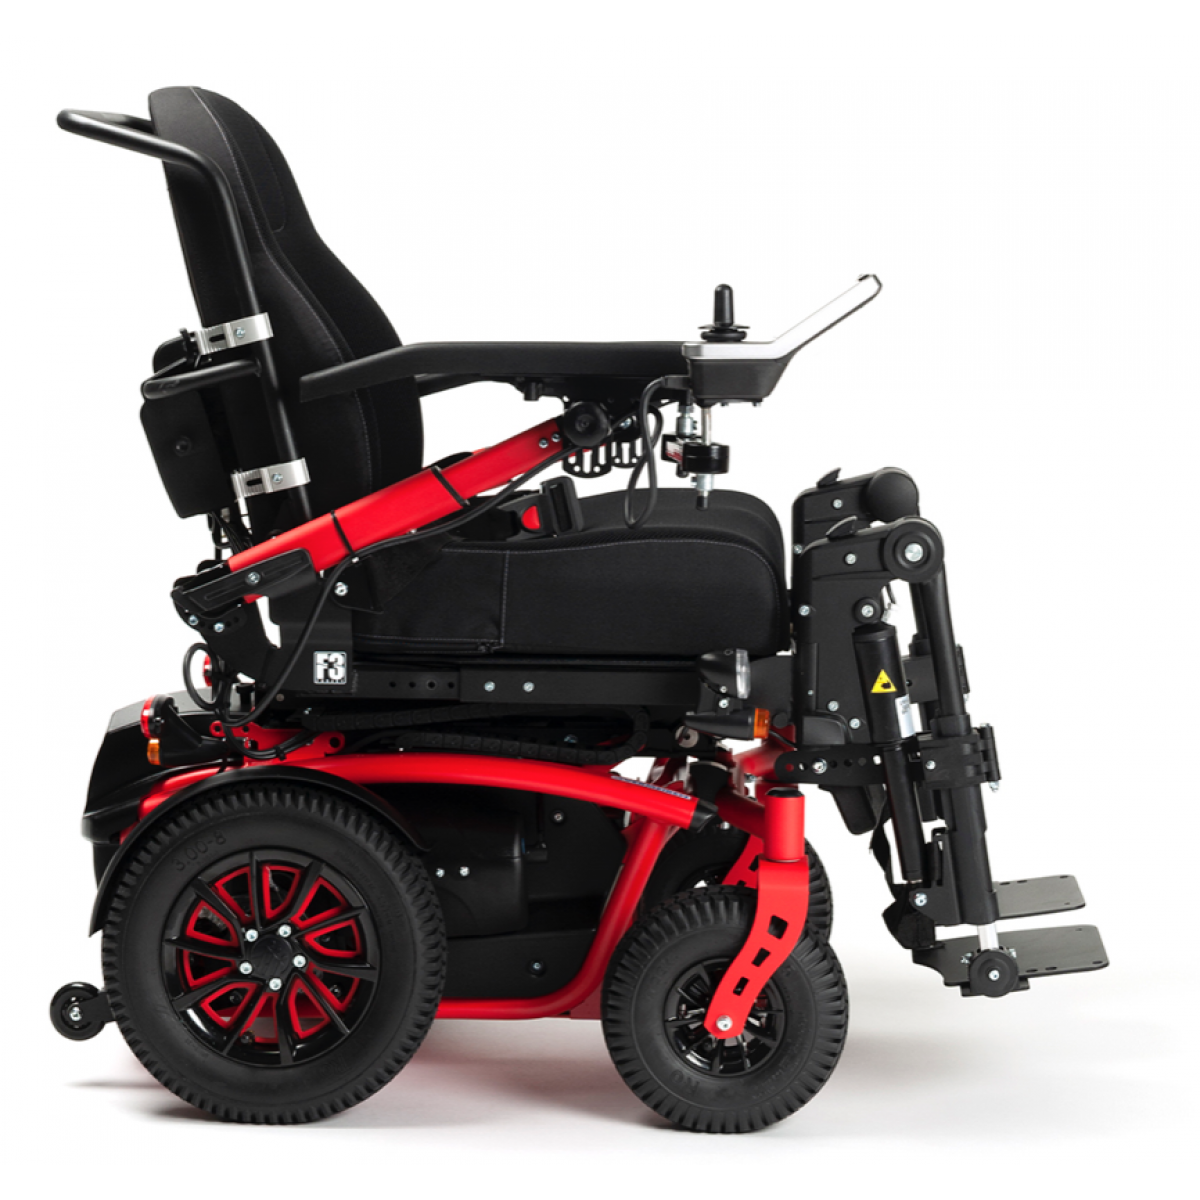 Коляска Вермейрен инвалидная. Инвалидная коляска с электроприводом Pulys 130. МТ 40 800w инвалидная коляска с электроприводом. Коляска Vermeiren. Электронные коляски купить